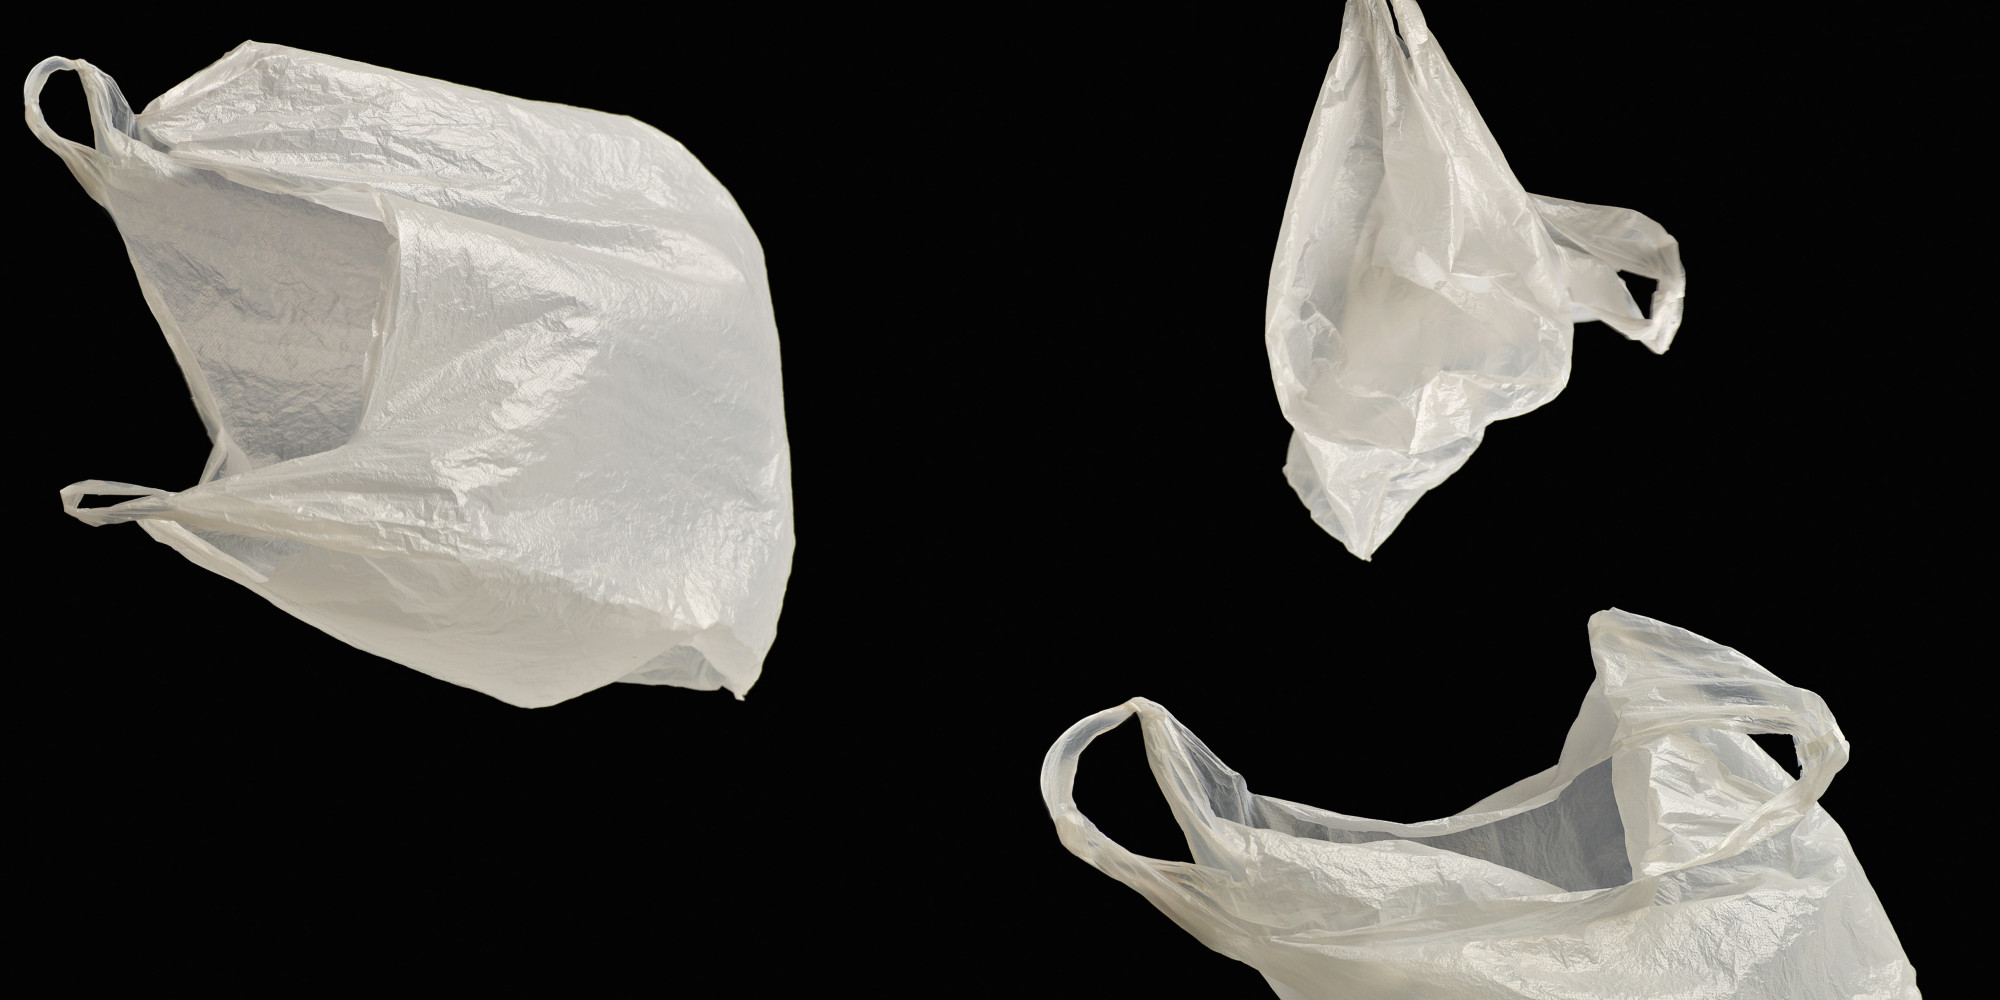 Hawaii County Set To Begin Plastic Bag Ban | HuffPost